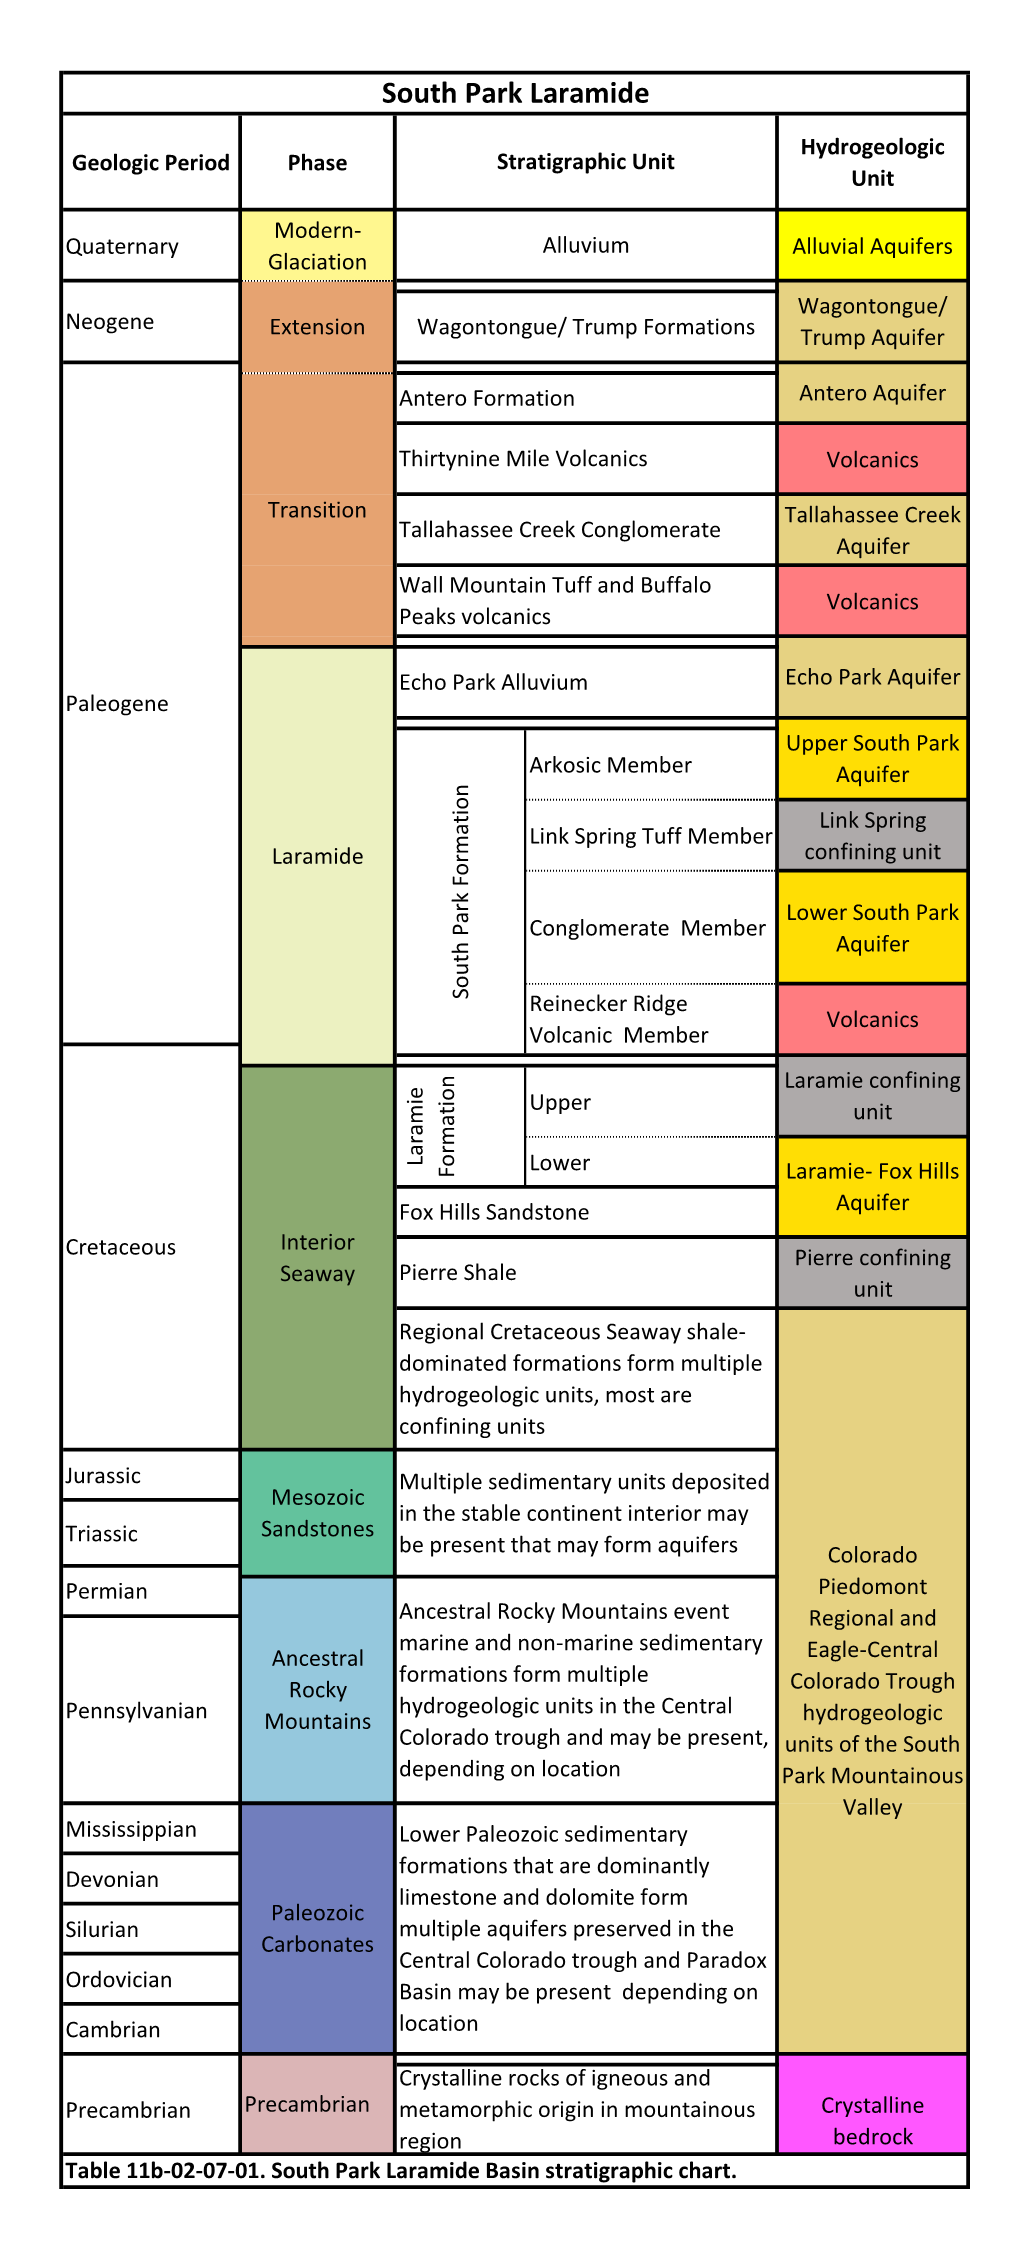 Table 11B-02-07-01. South Park Laramide Basin Stratigraphic Chart